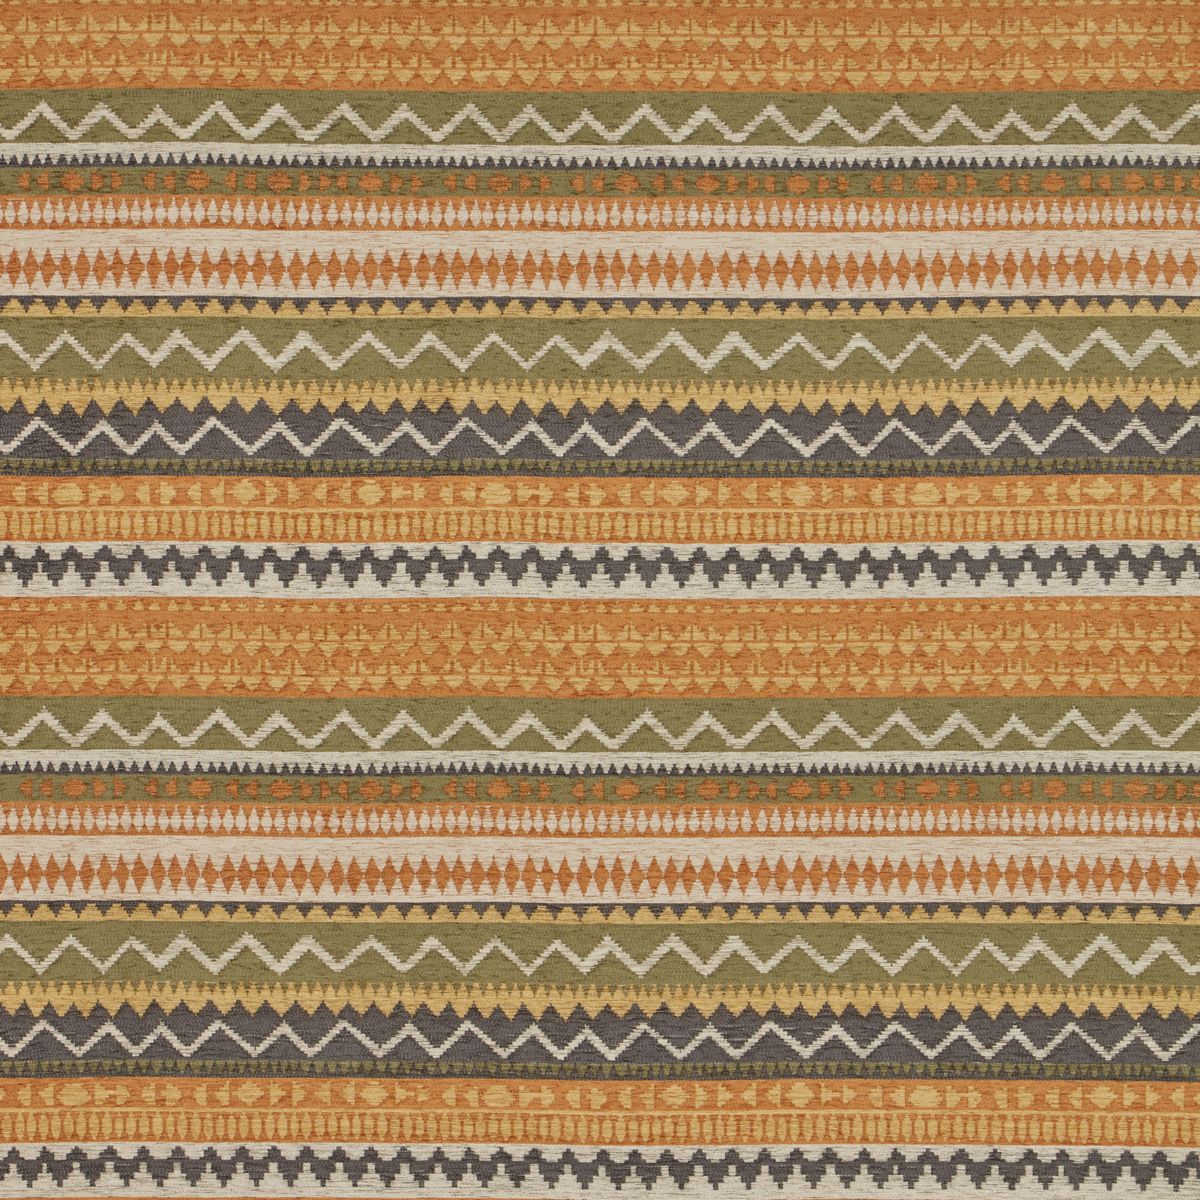 Kitzbuhel Spice Fabric by iLiv